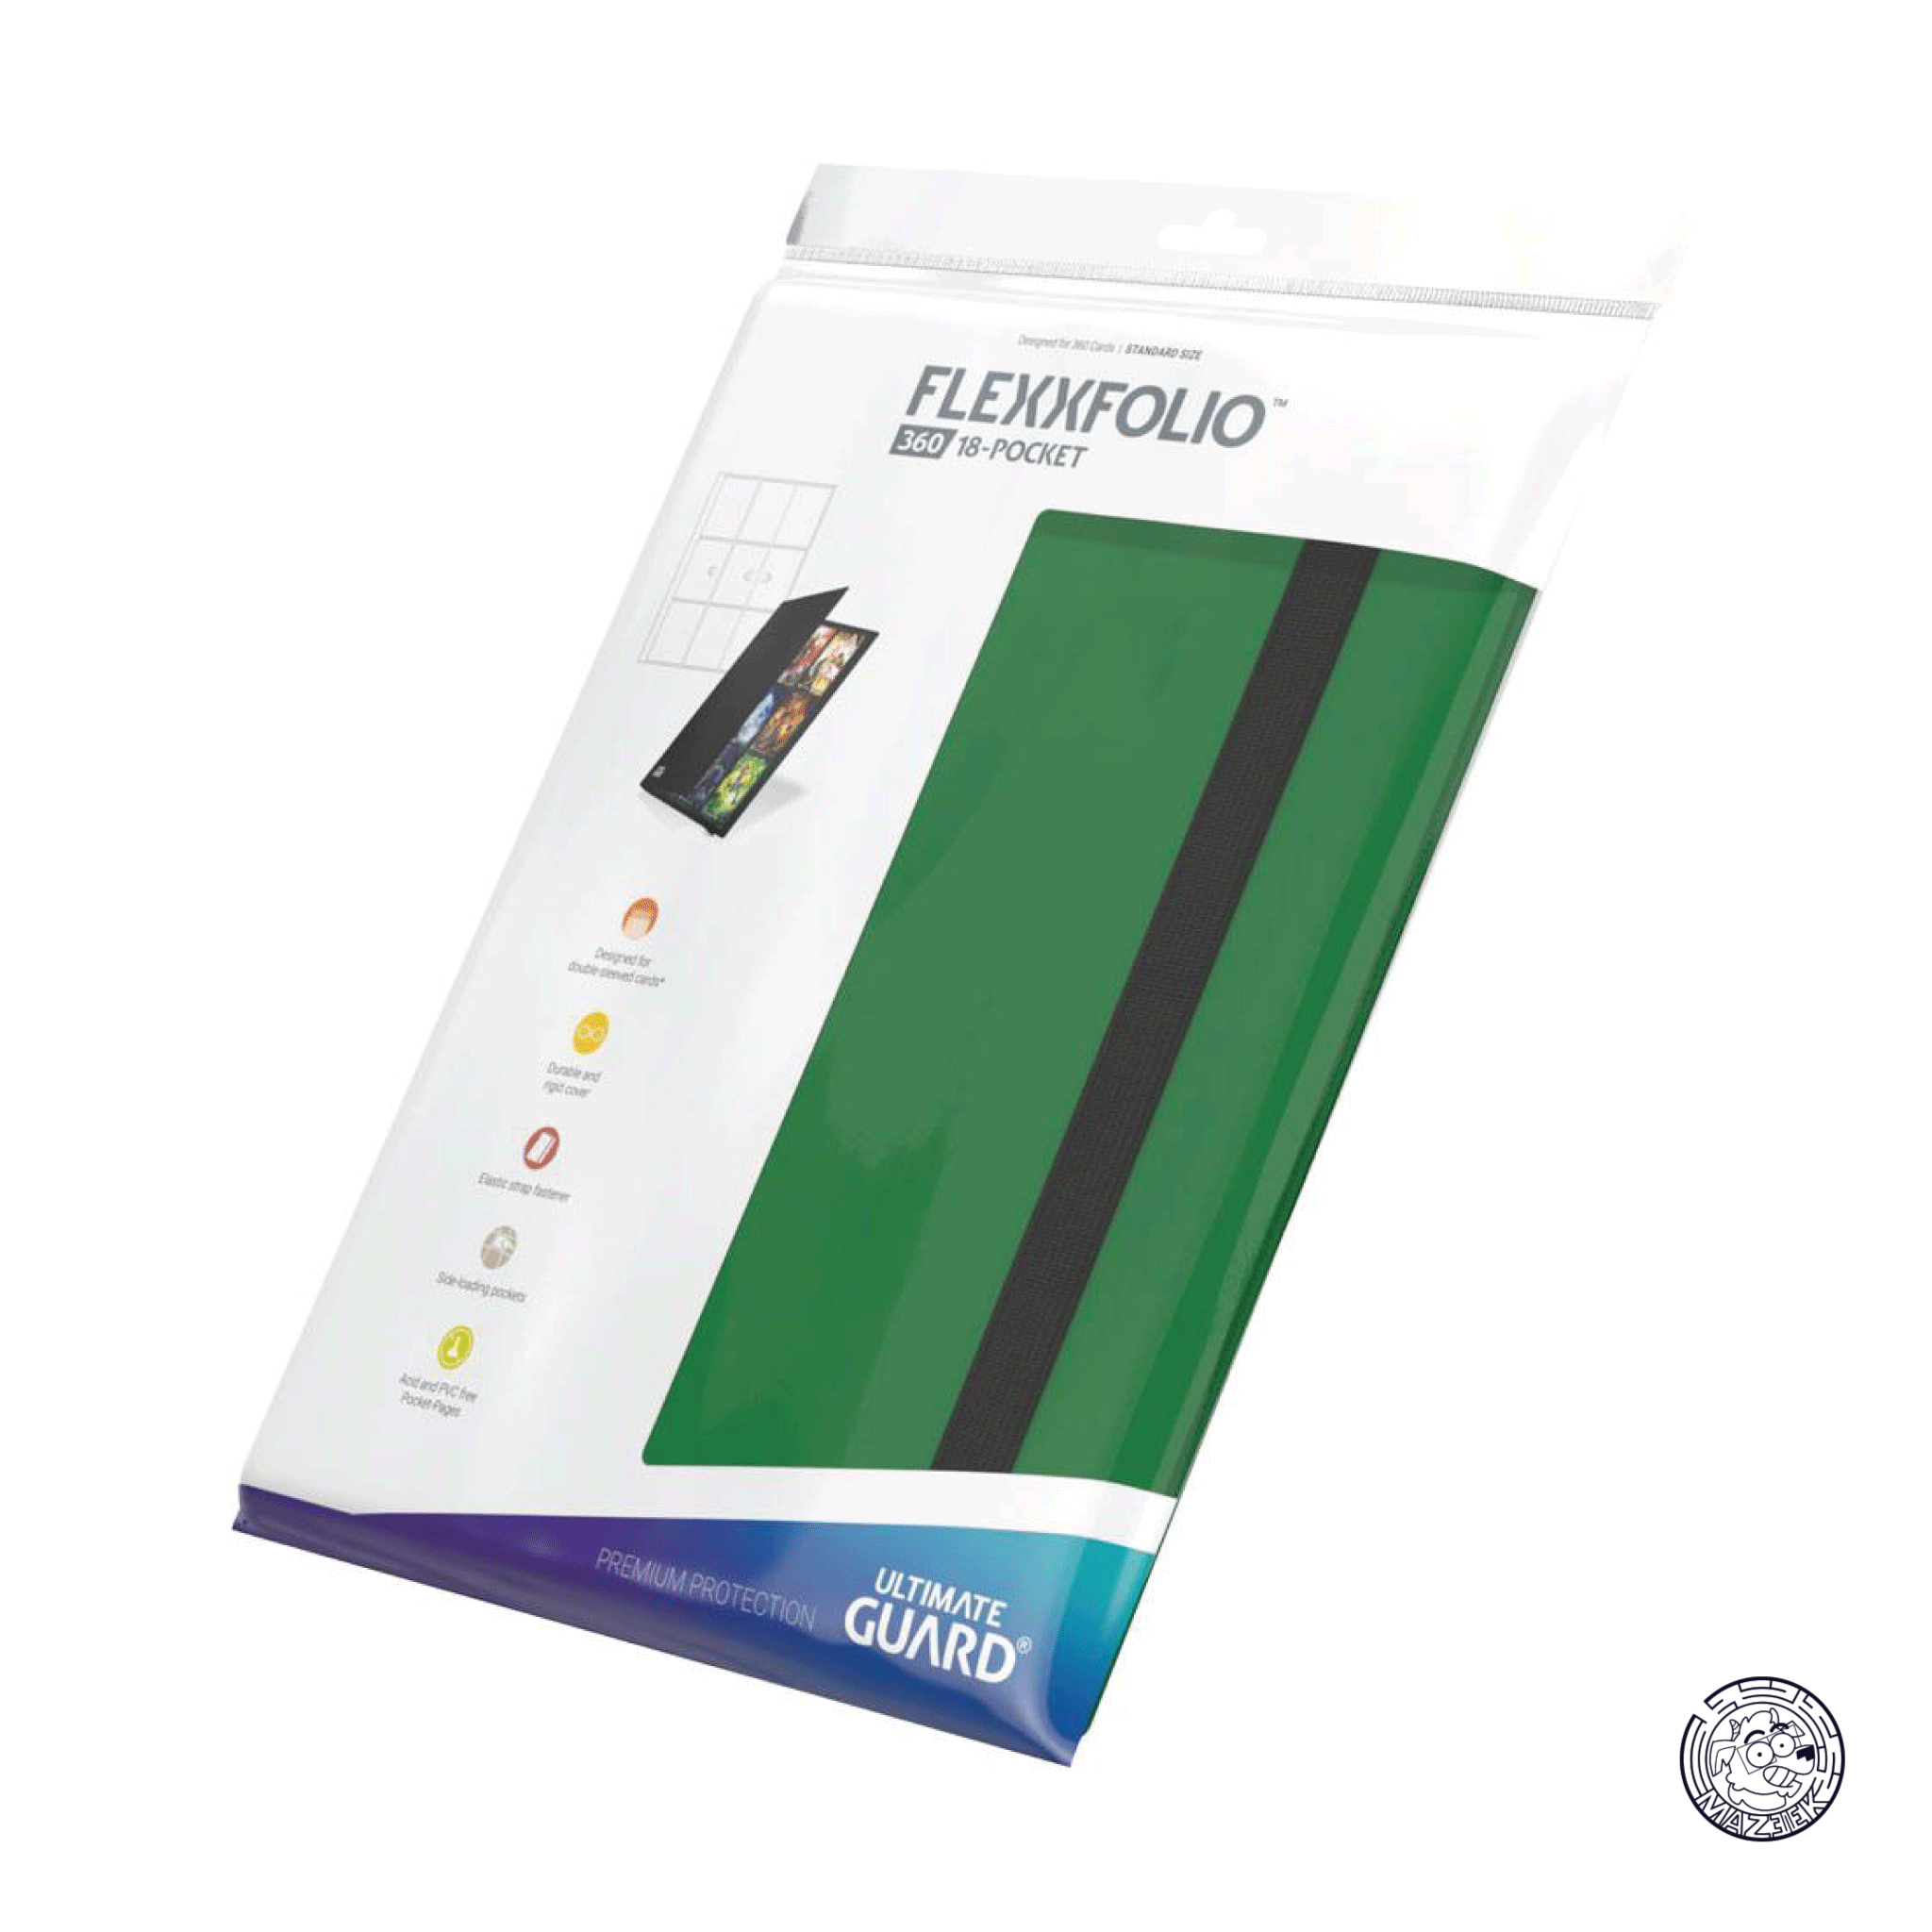 Ultimate Guard - Flexxfolio 360 - 18-Pocket (Green)